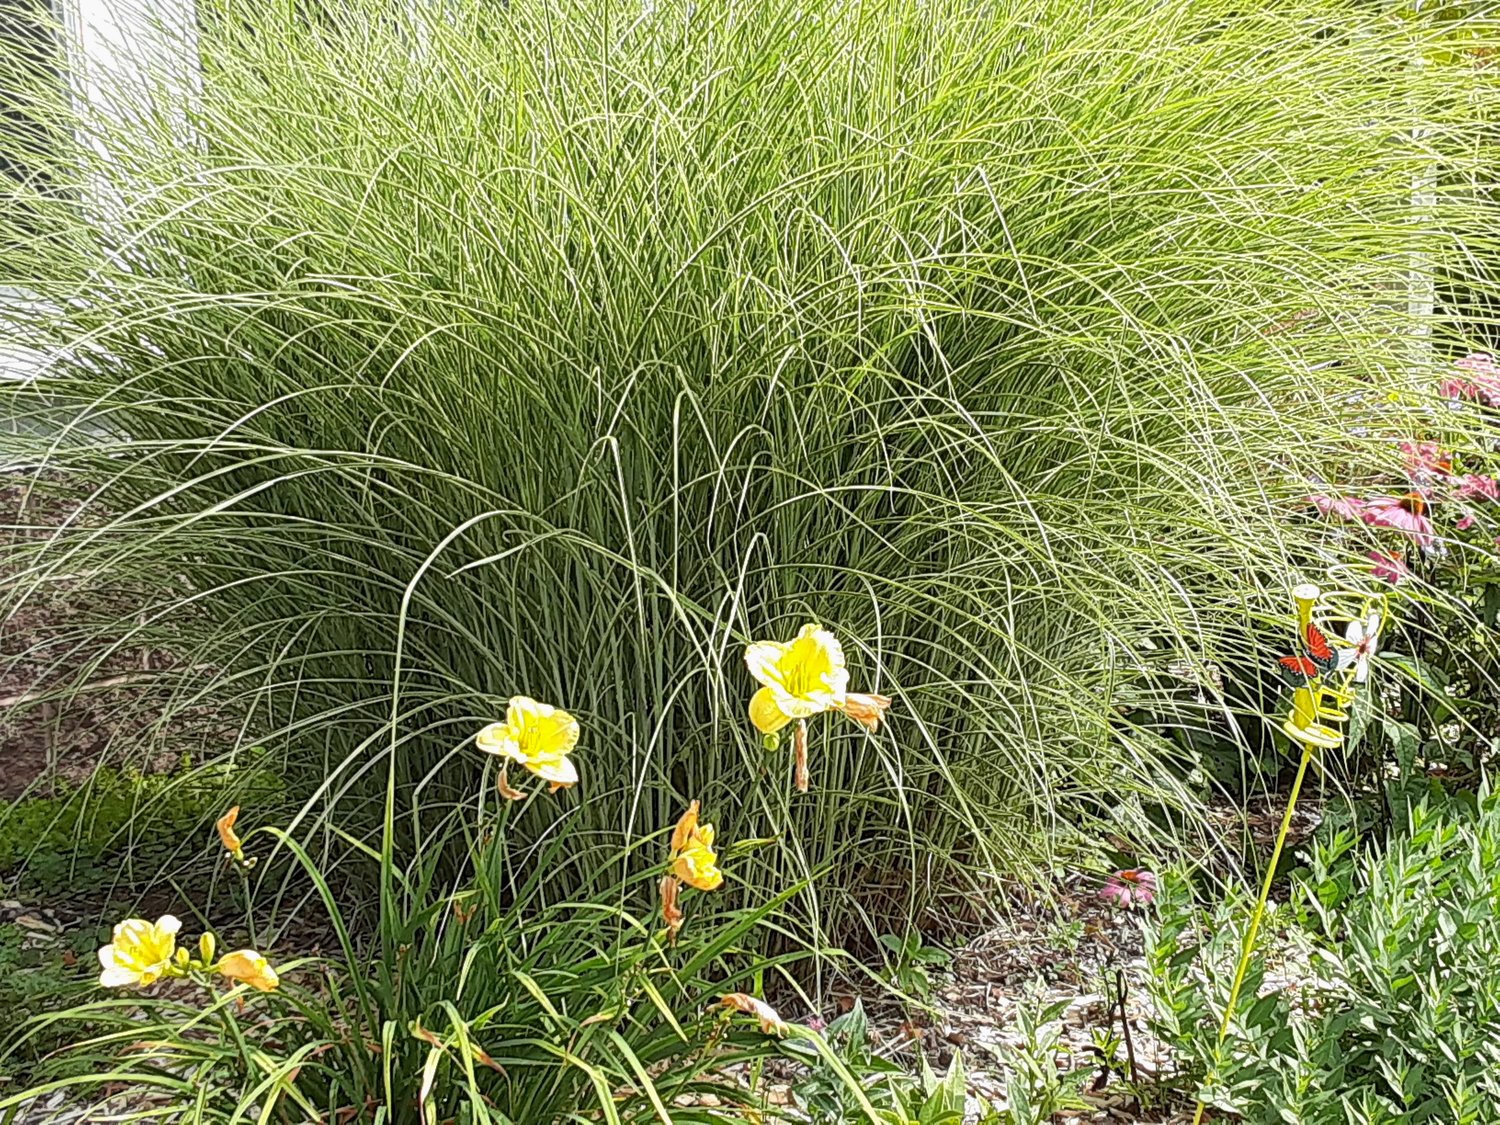 Miscanthus sinesis variegatus, also known as eulalia grass